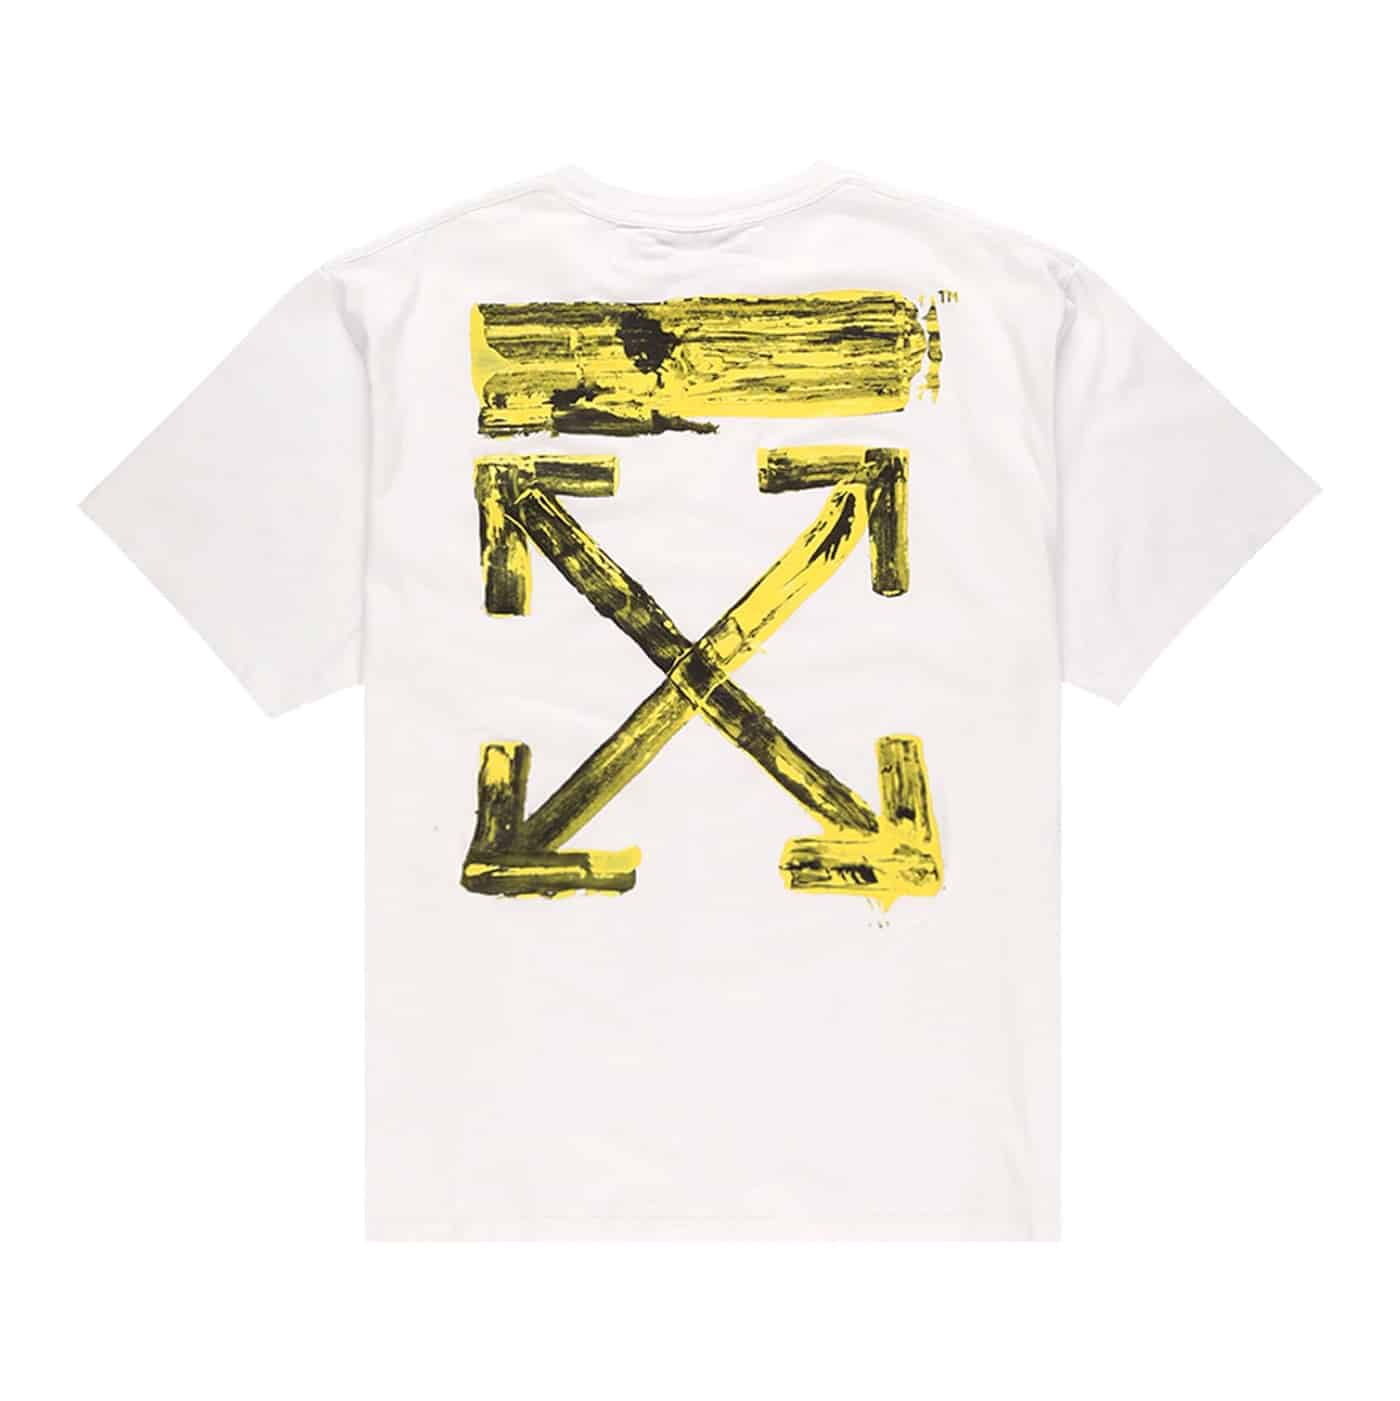 OFF-WHITE Oversized Acrylic Arrows S/S T-Shirt White/Yellow Off-White